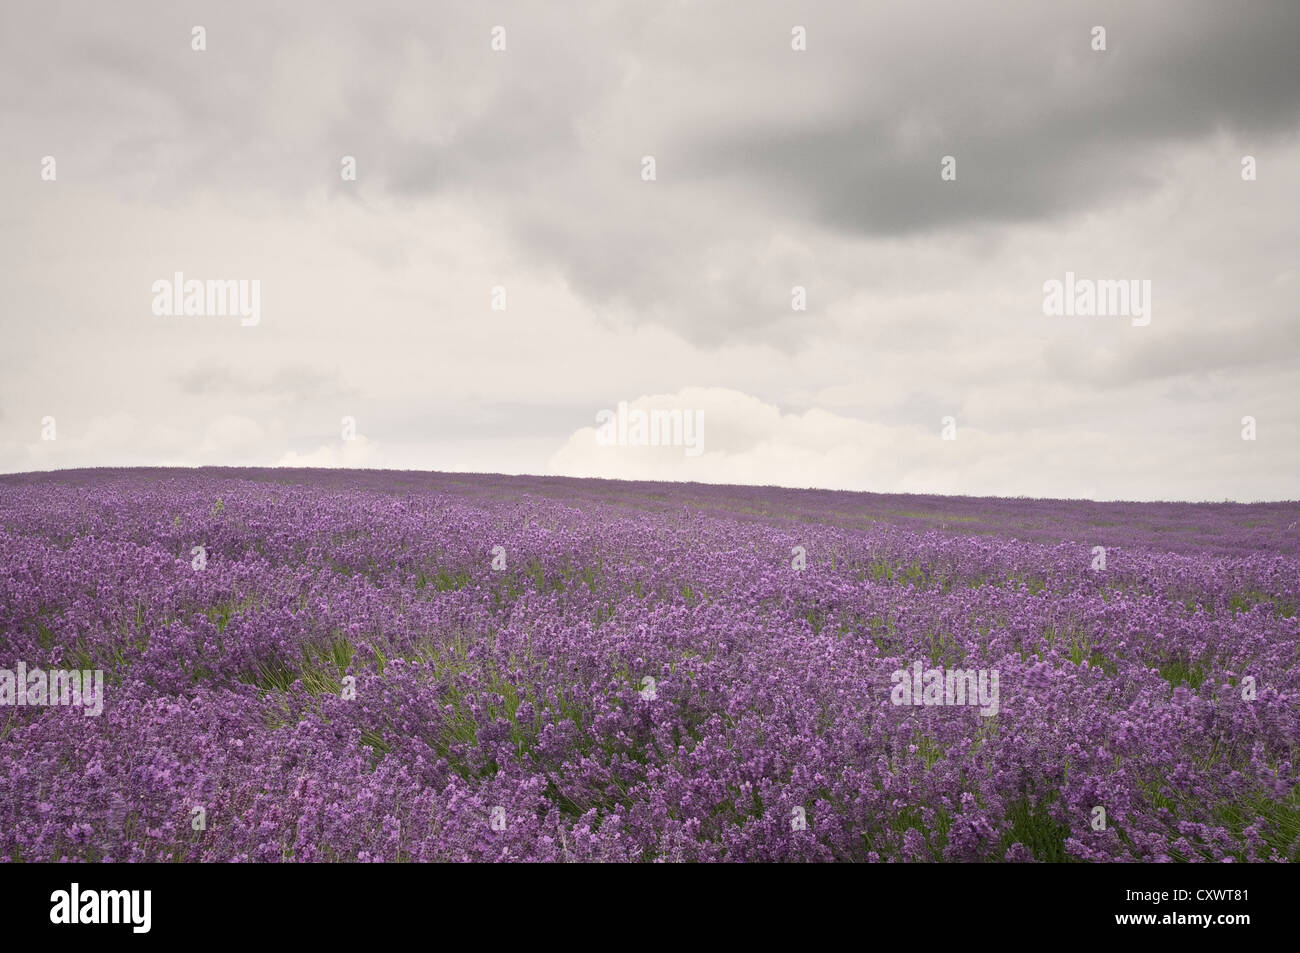 Bereich der lila Blumen unter bewölktem Himmel Stockfoto